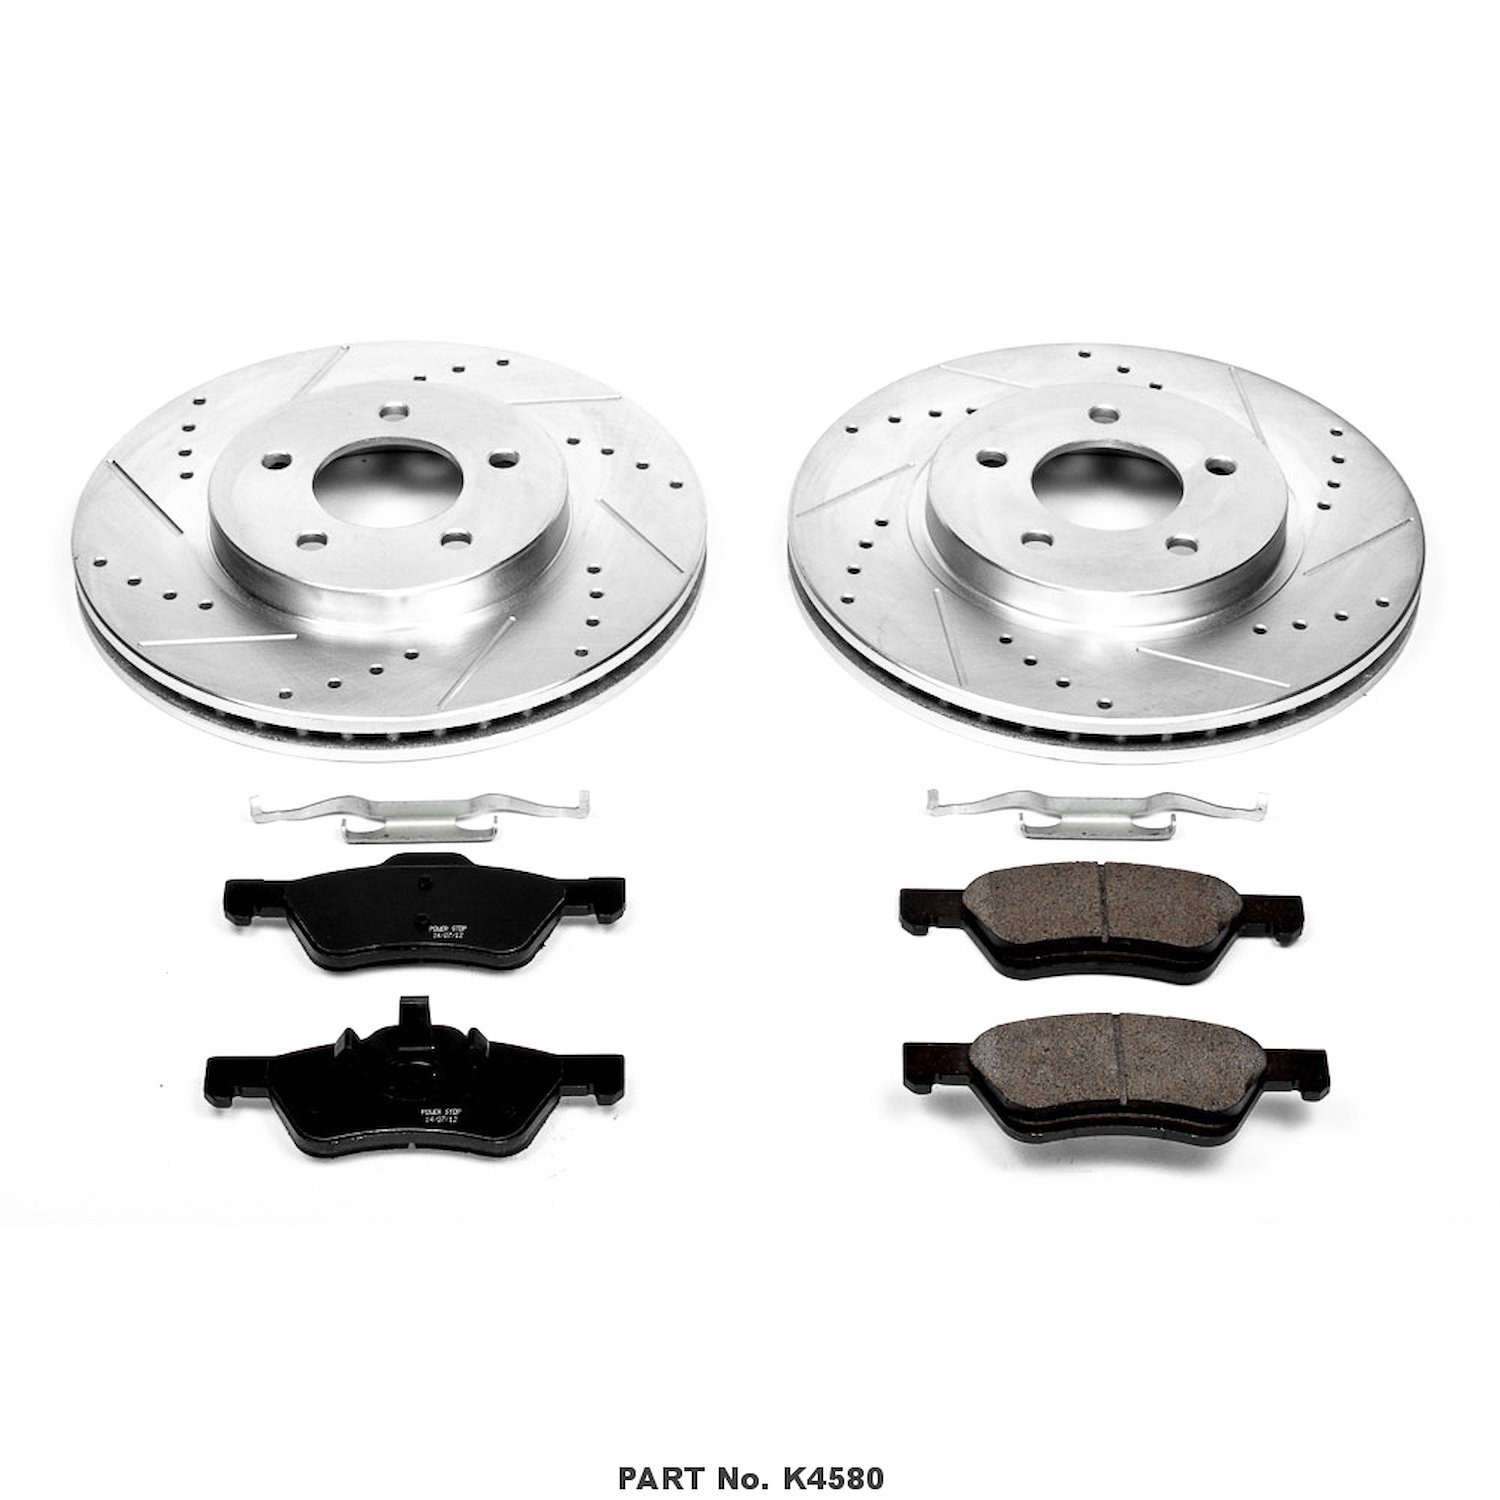 Z23 Evolution Brake Kit for Ford Escape, Mercury Mariner and more